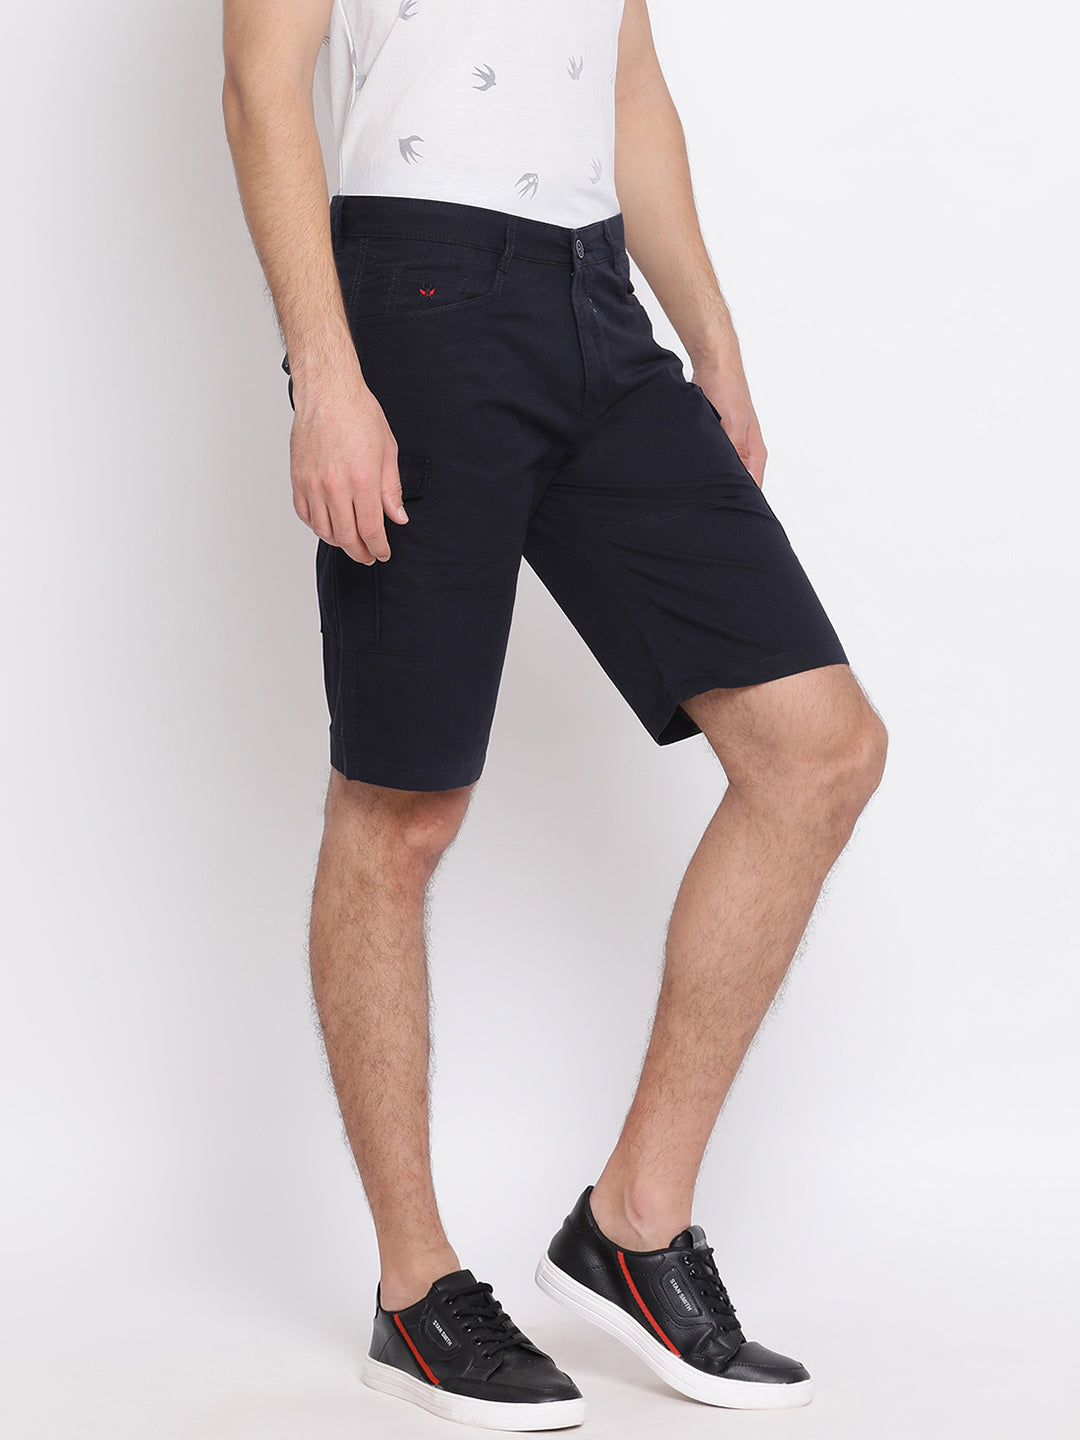 Navy Blue Shorts - Men Shorts